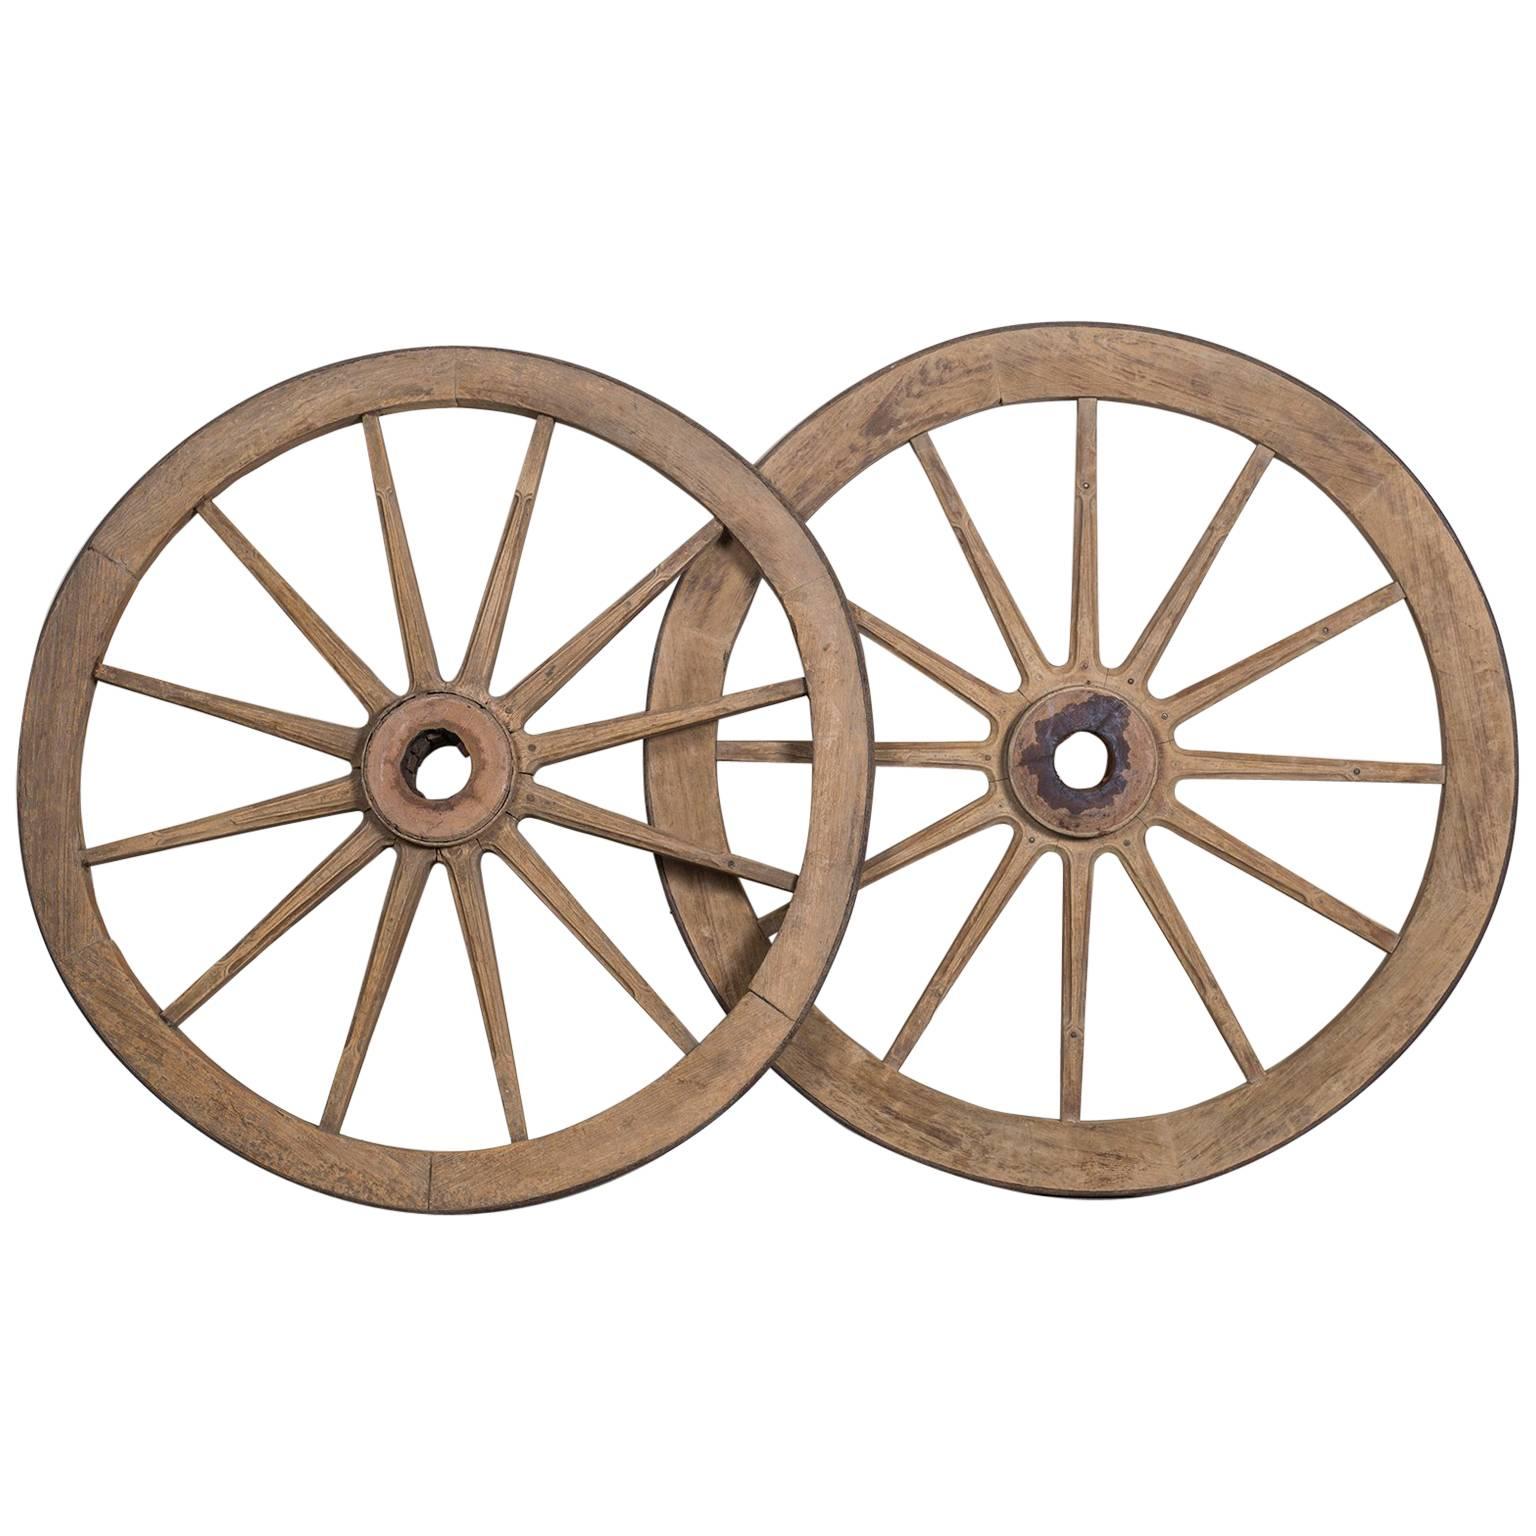 Pair of Antique French Iron Bound Wagon Wheels, circa 1880